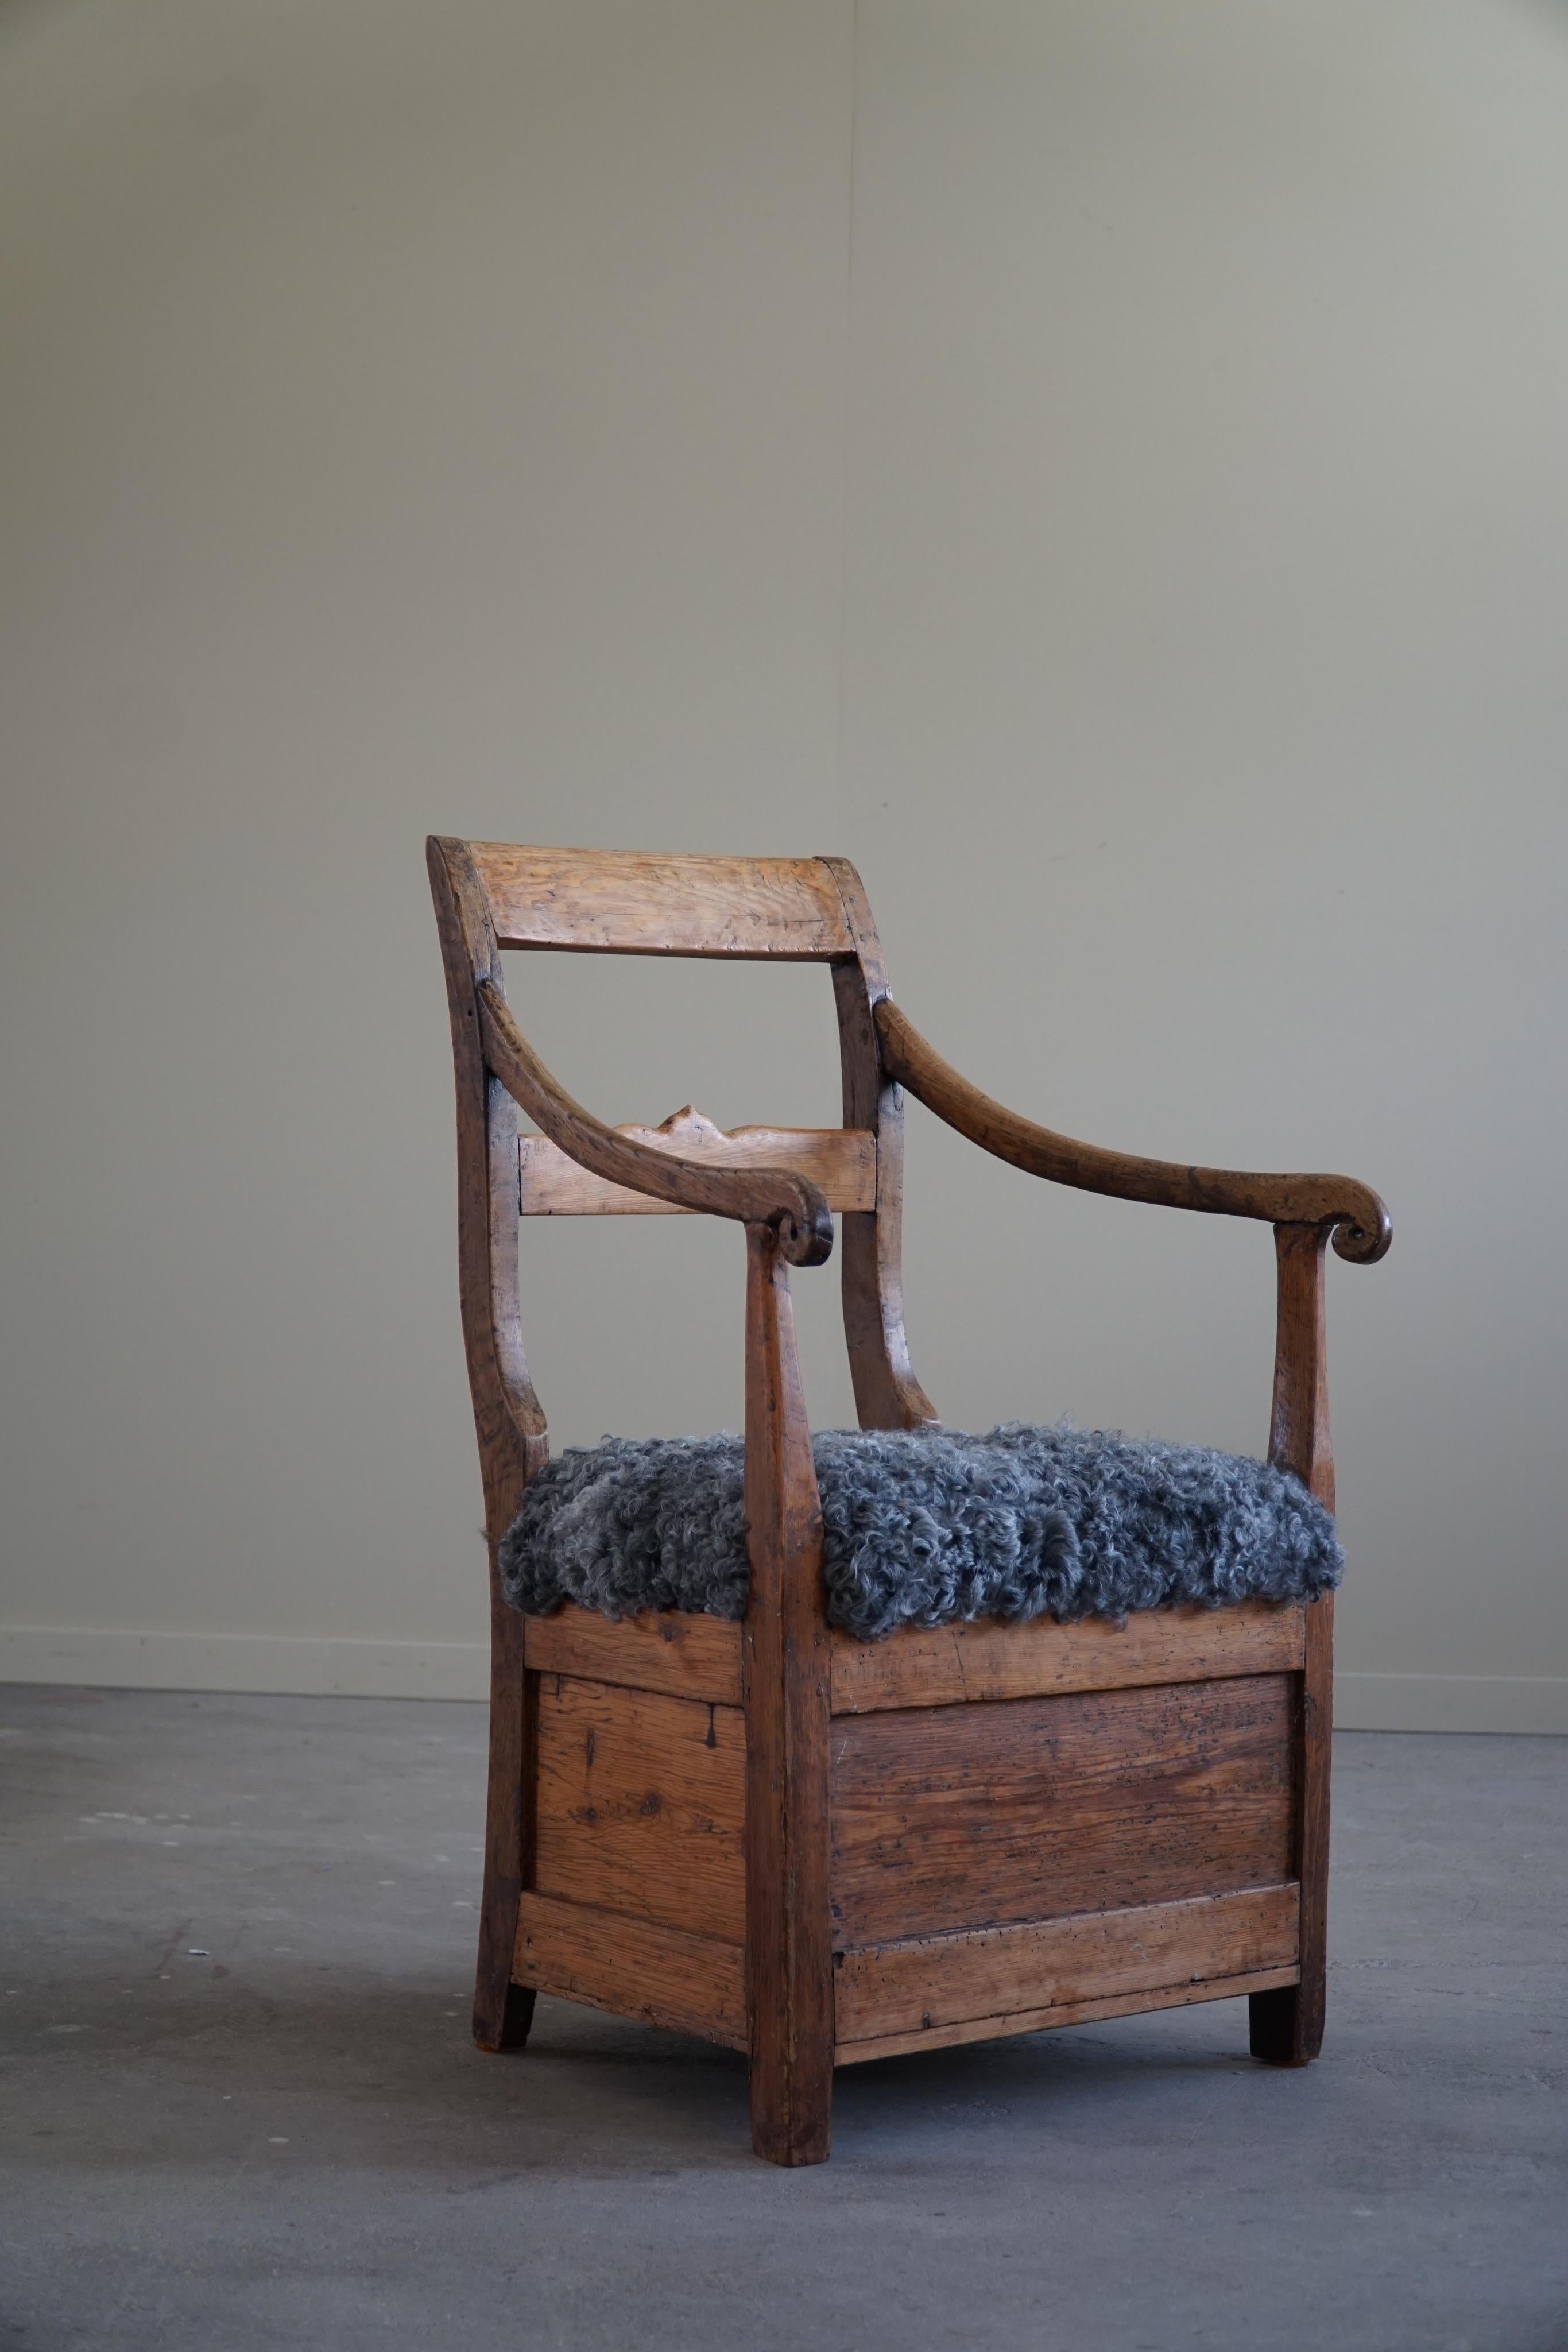 Danish Folk Art Armchair in Solid Oak & Gotland Sheepskin, Mid 19th Century For Sale 8